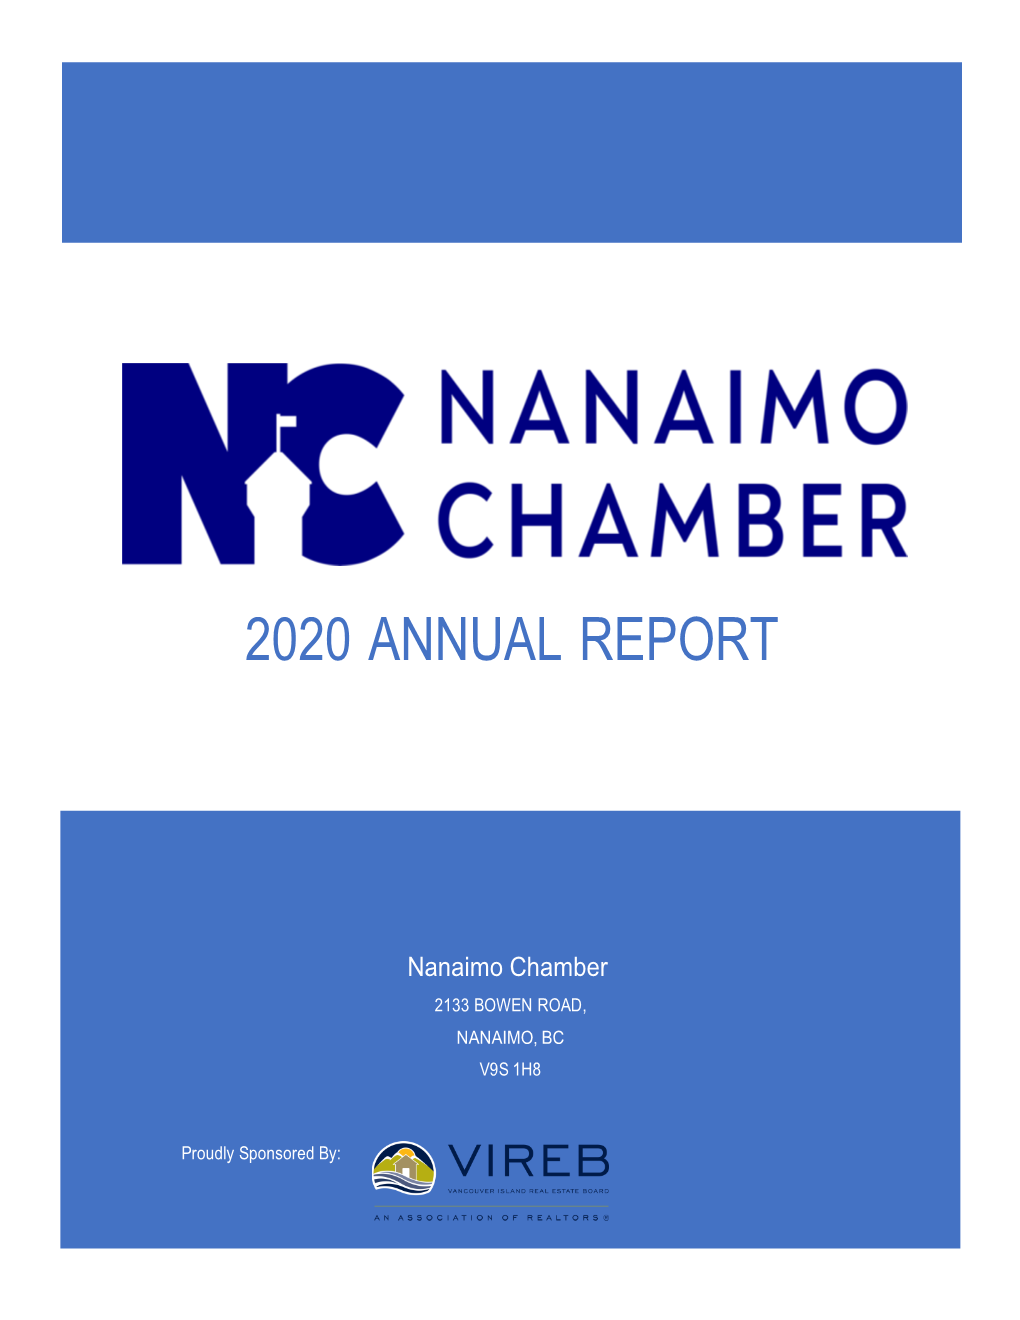 Nanaimo Chamber Annual Report 2020